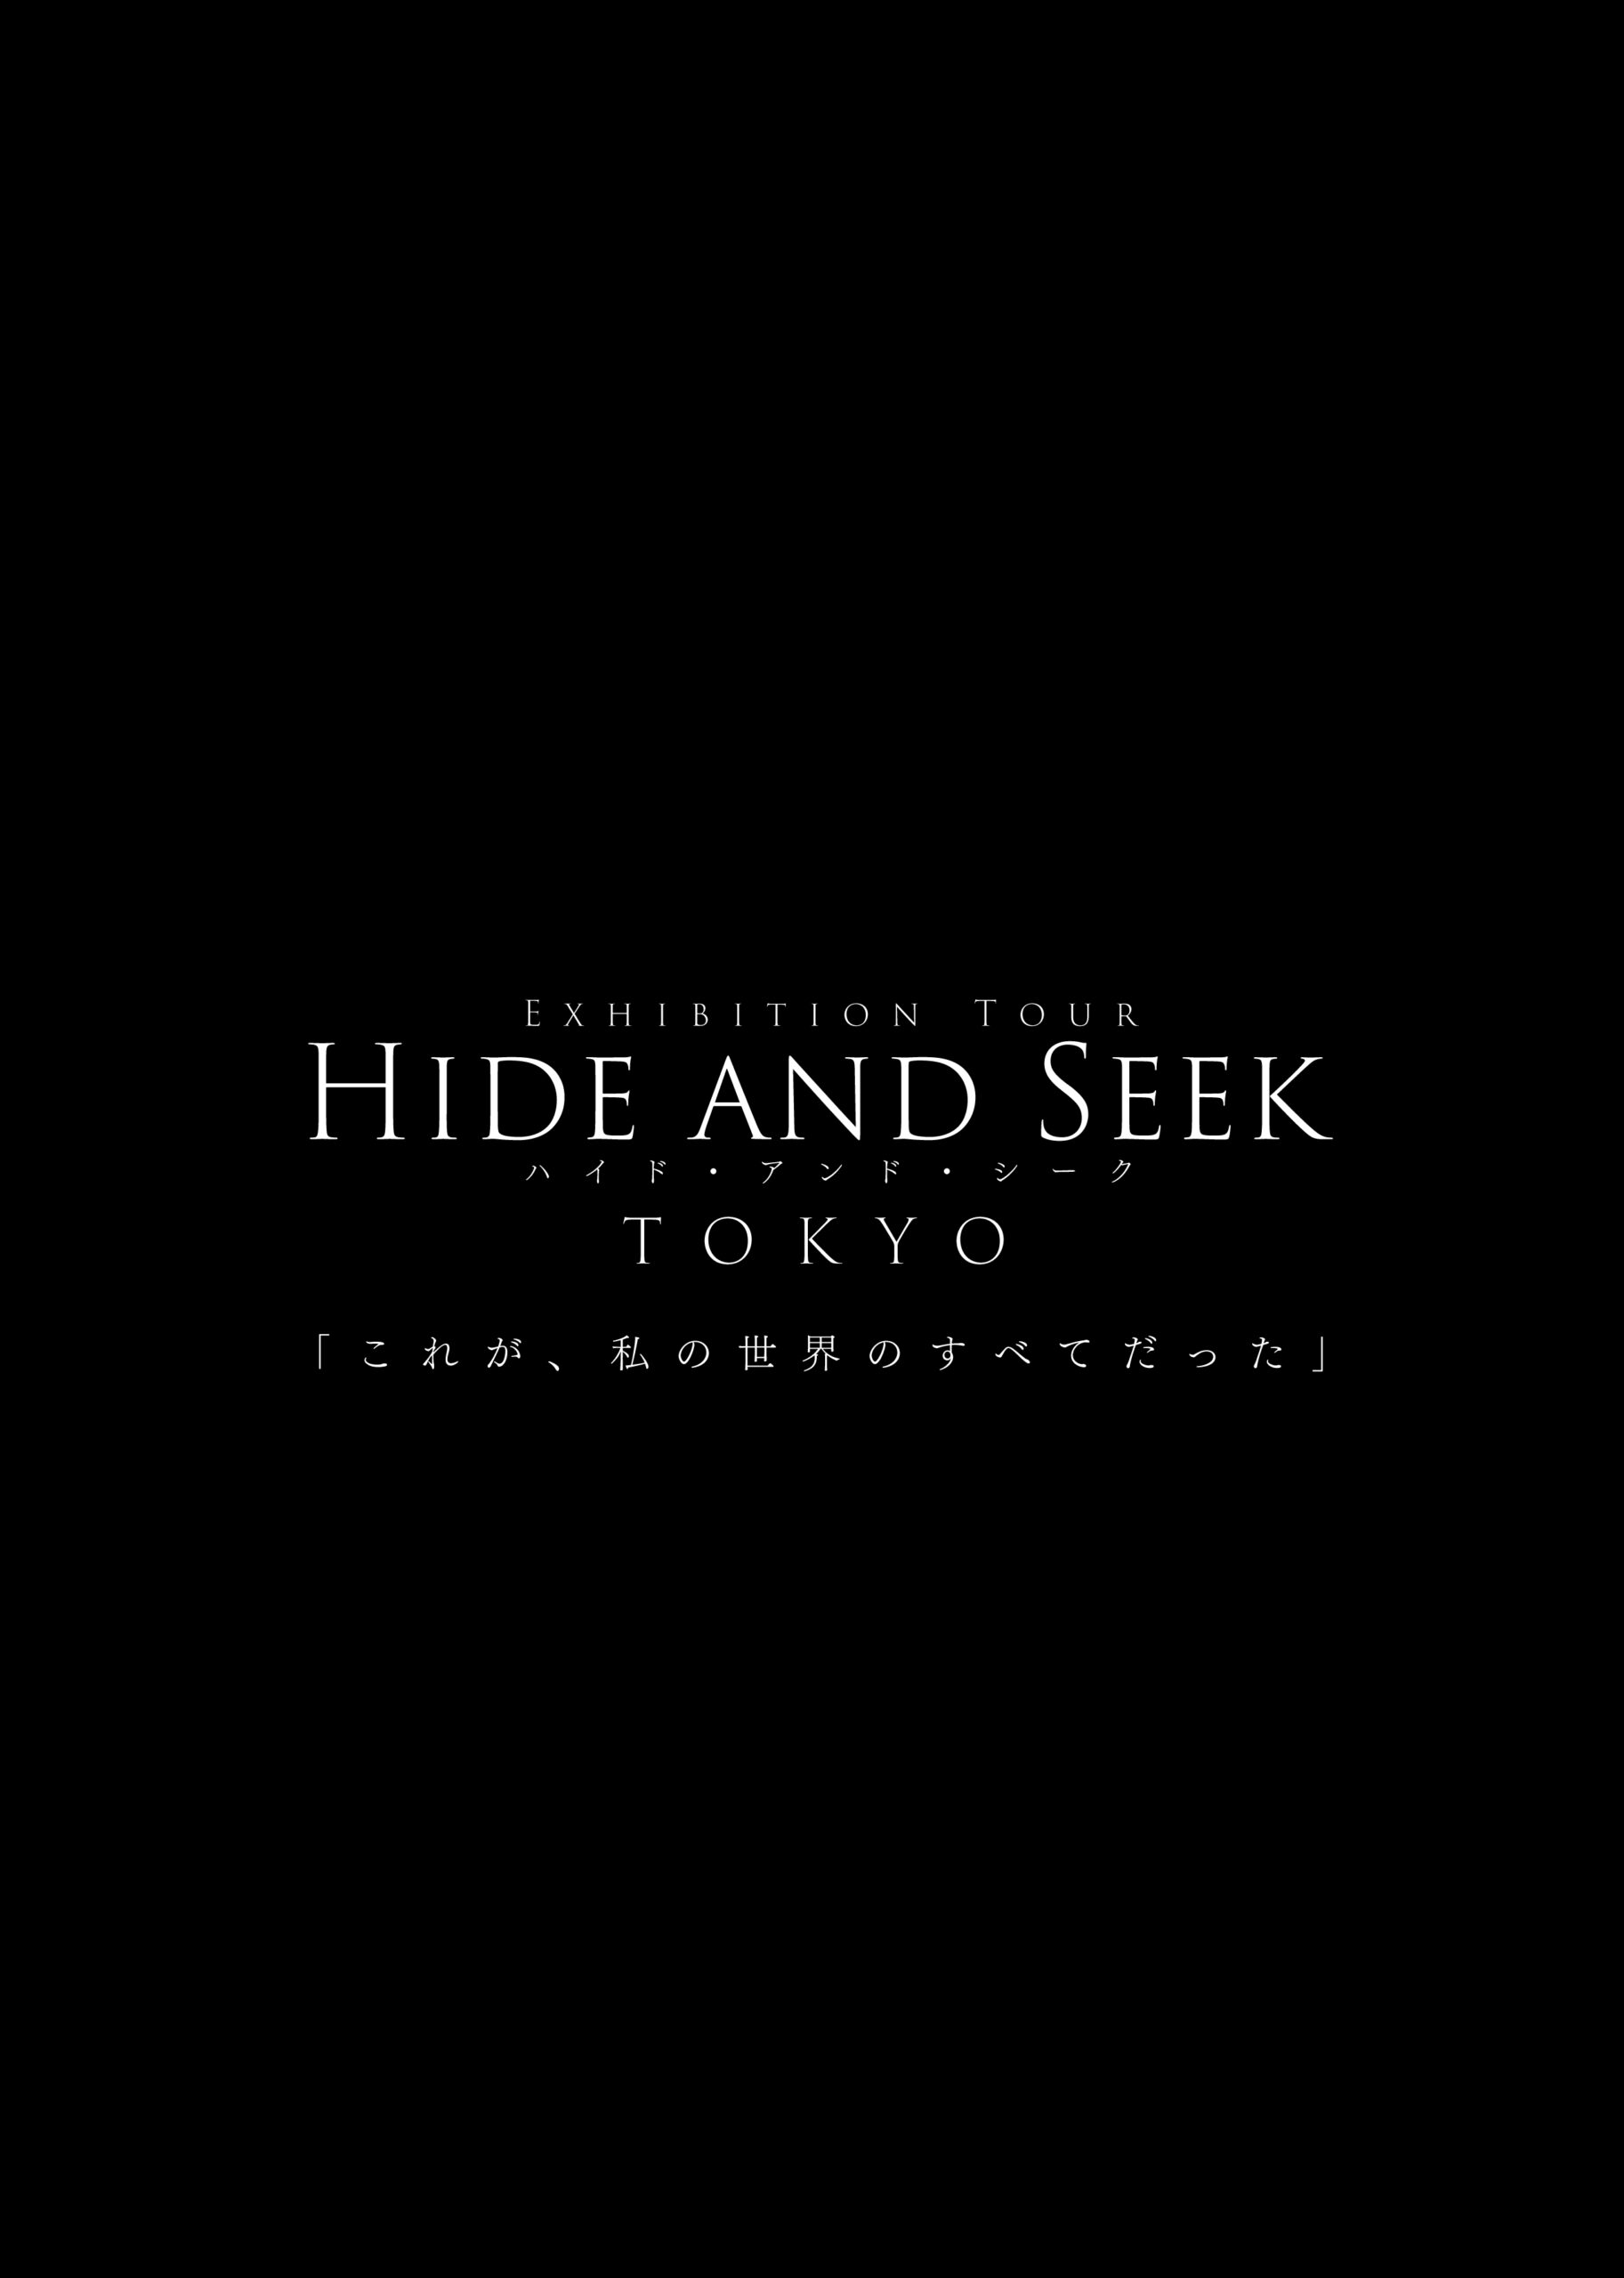 Exhibition Tour Hide and Seek at Tokyo by Yuduki Hoshino